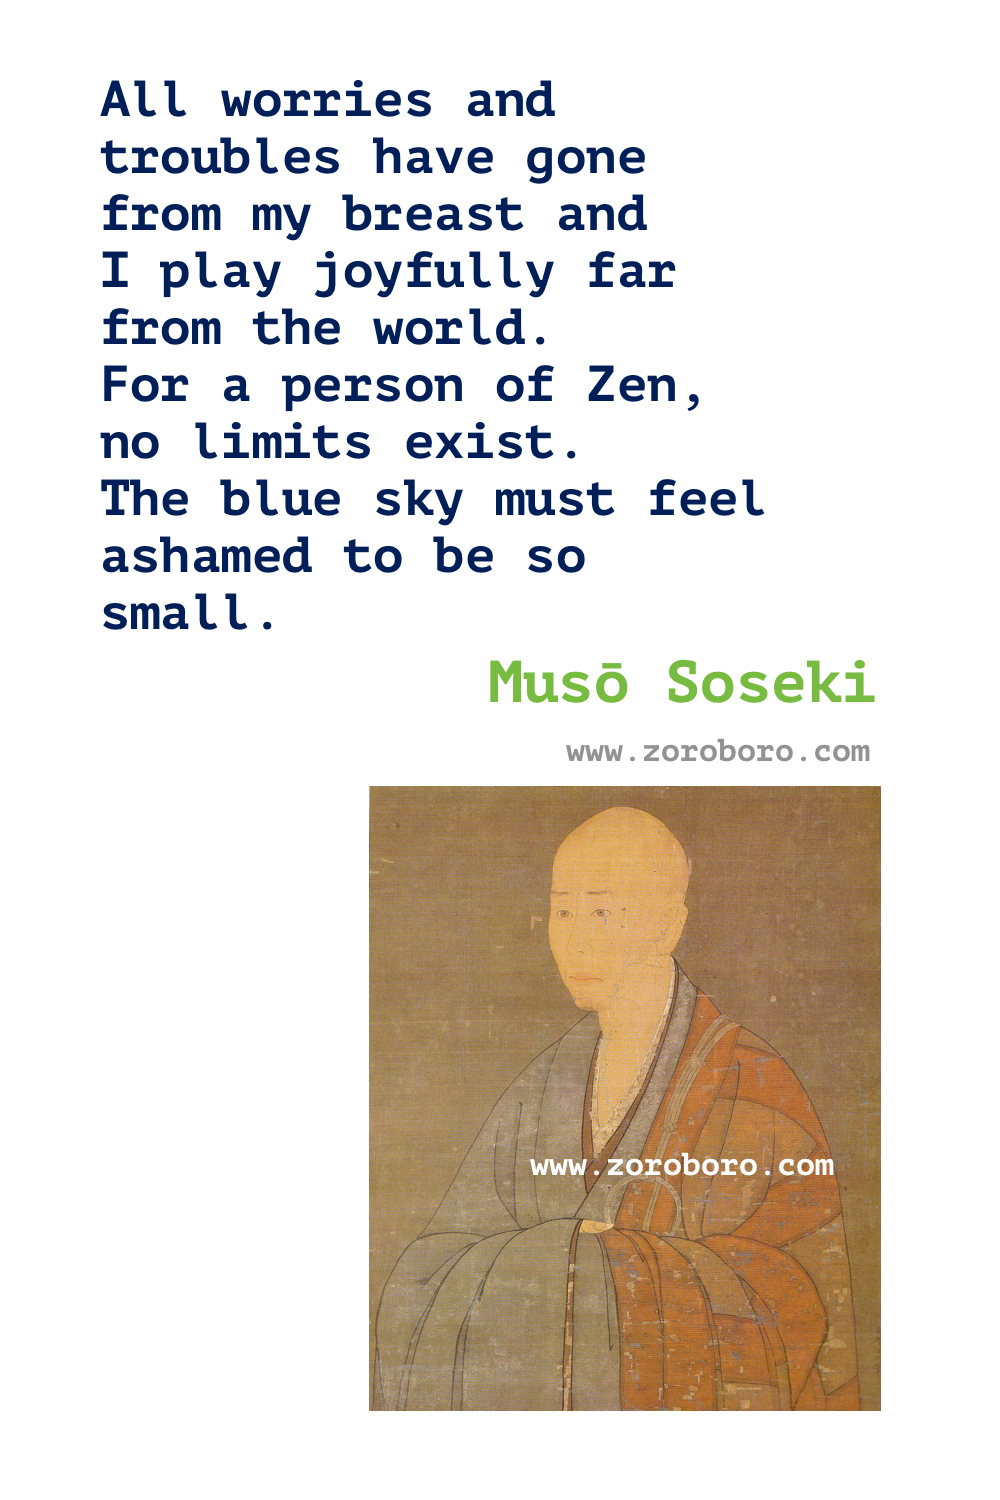 Musō Soseki Quotes. Dreams, Muso Soseki Poems, Garden Quotes, & Word Of Wisdom. Muso Soseki Philosophy. Muso Soseki Quotes.